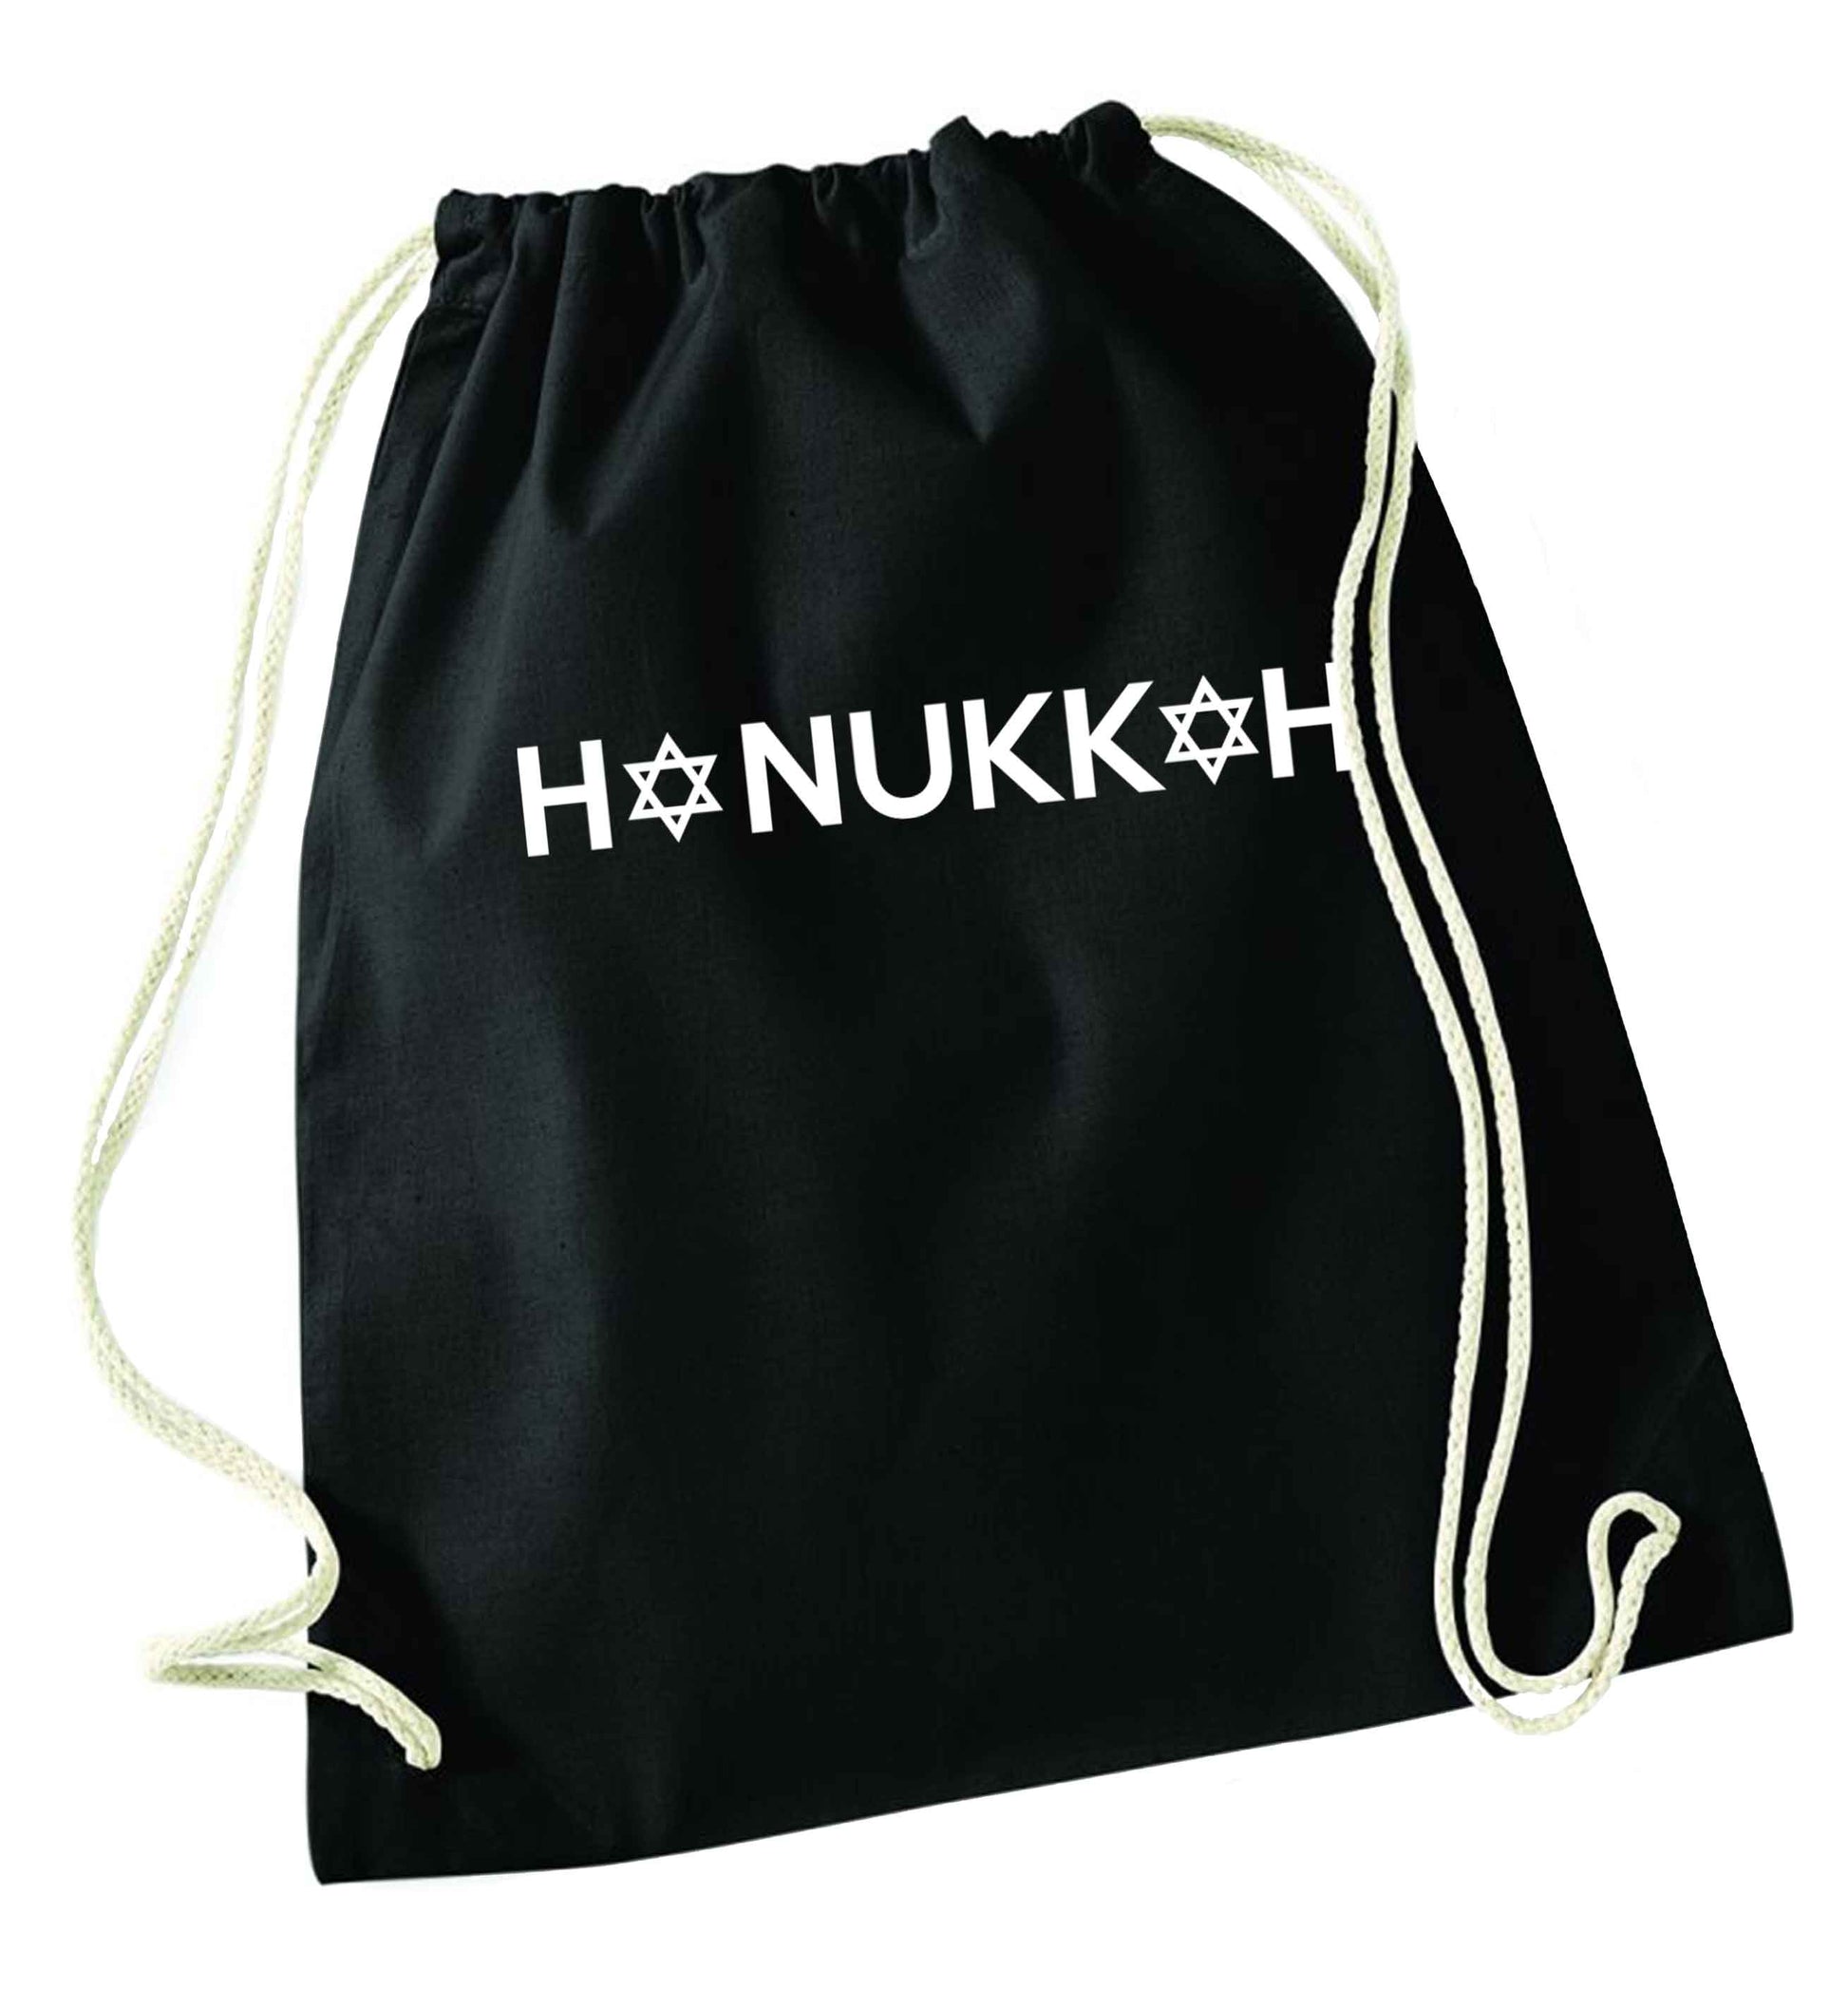 Hanukkah star of david black drawstring bag